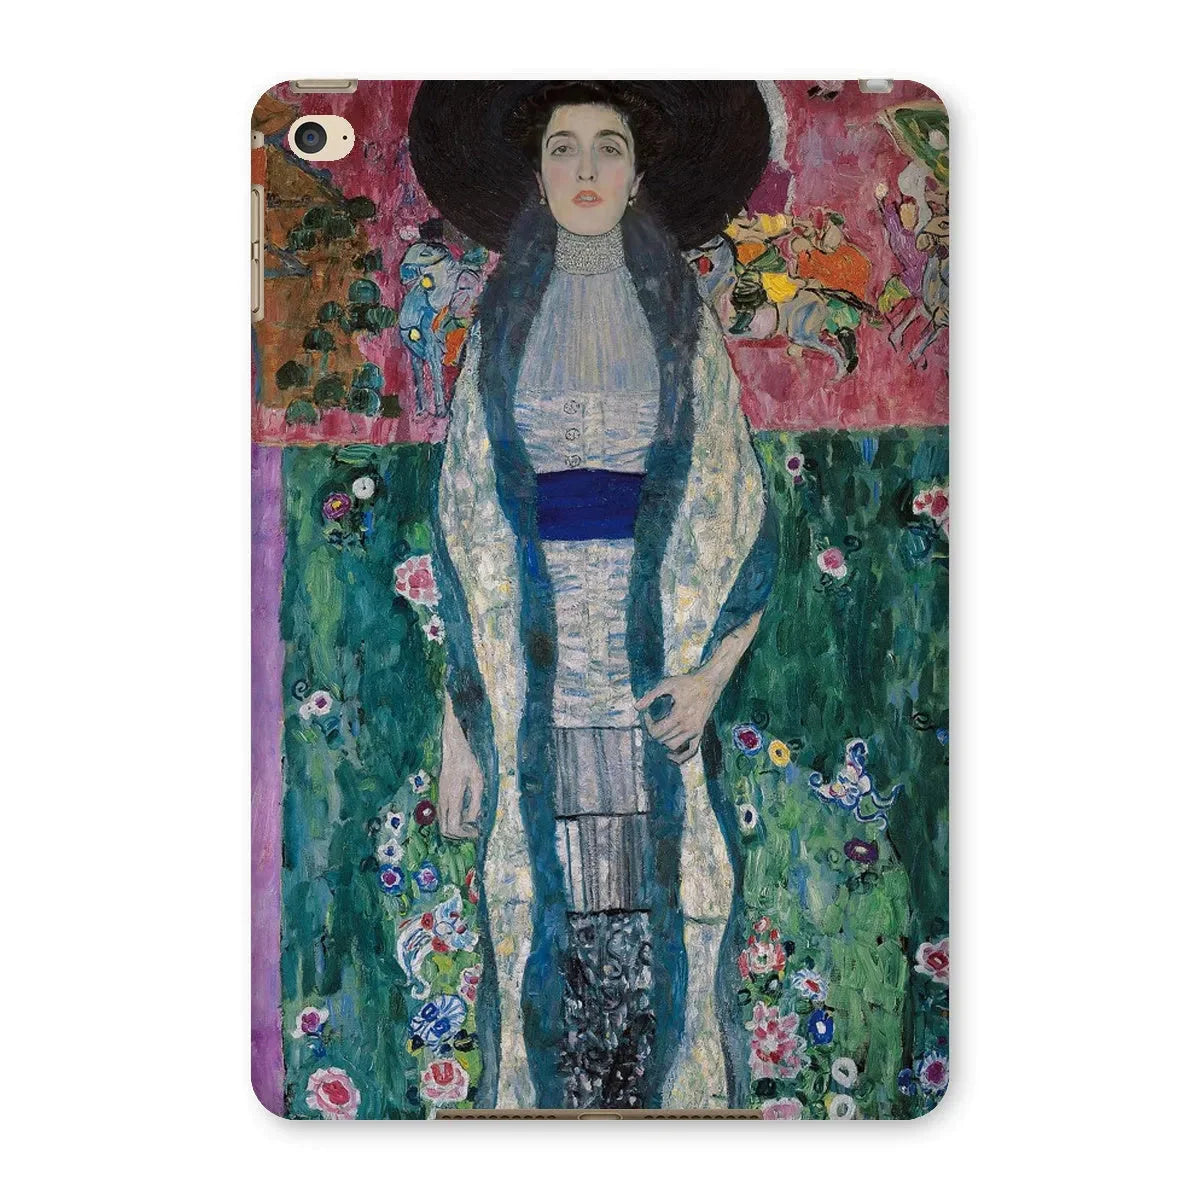 Adele Bloch - bauer By Gustav Klimt Aesthetic Ipad Case - Slim Designer Back Cover - Ipad Mini 4 - Gloss - Tablet